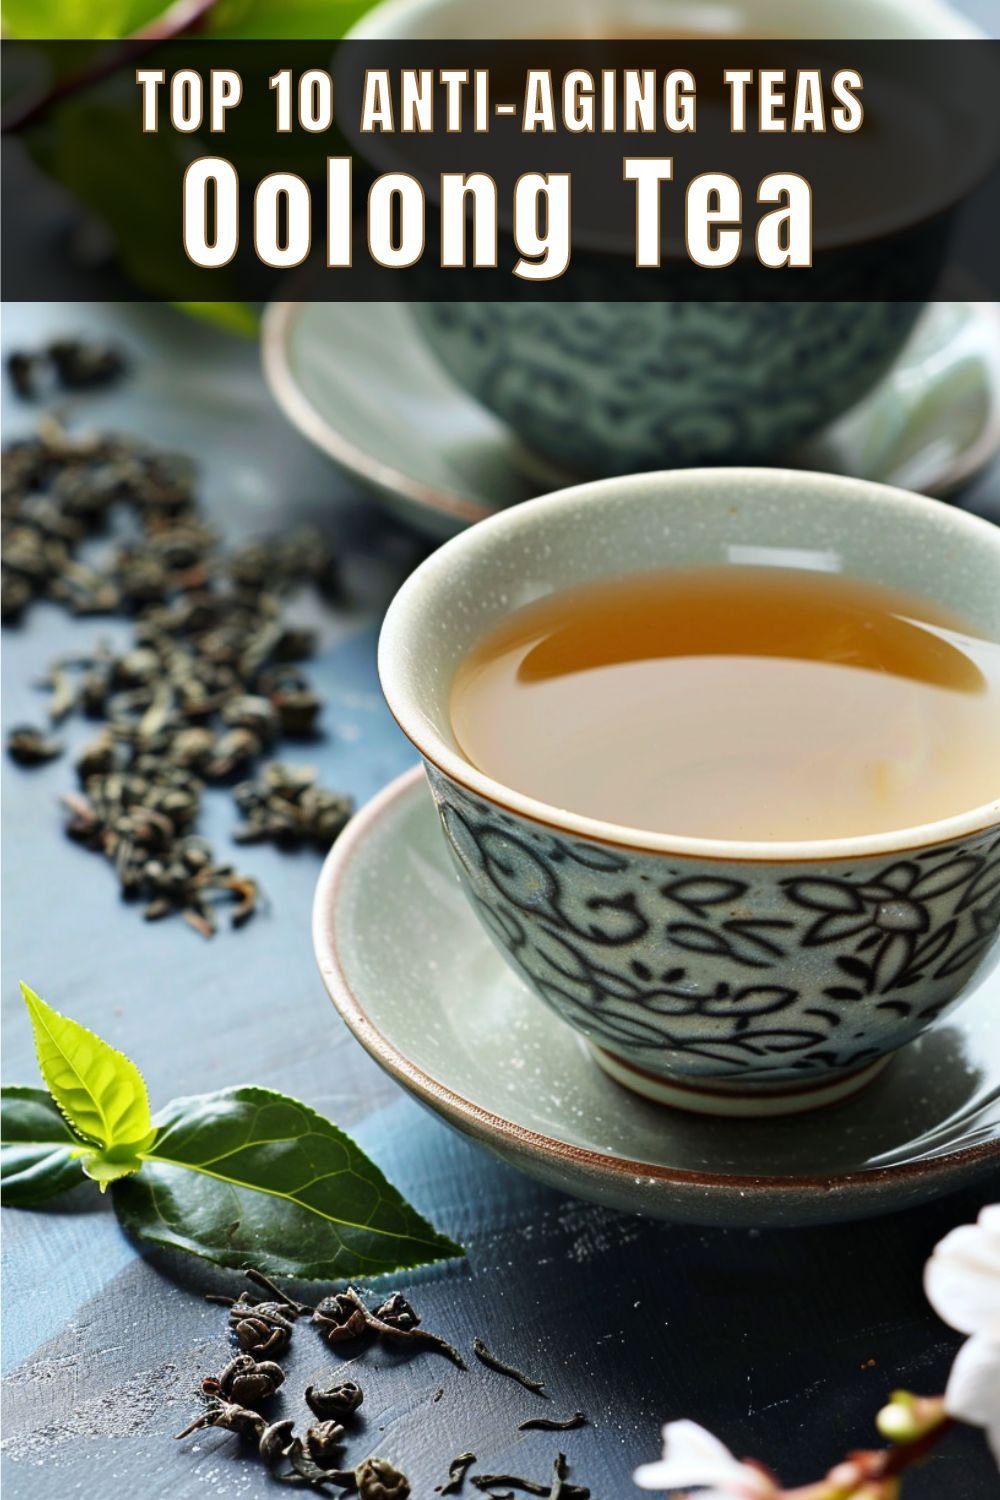 Top 10 Anti-Aging Teas Oolong Tea